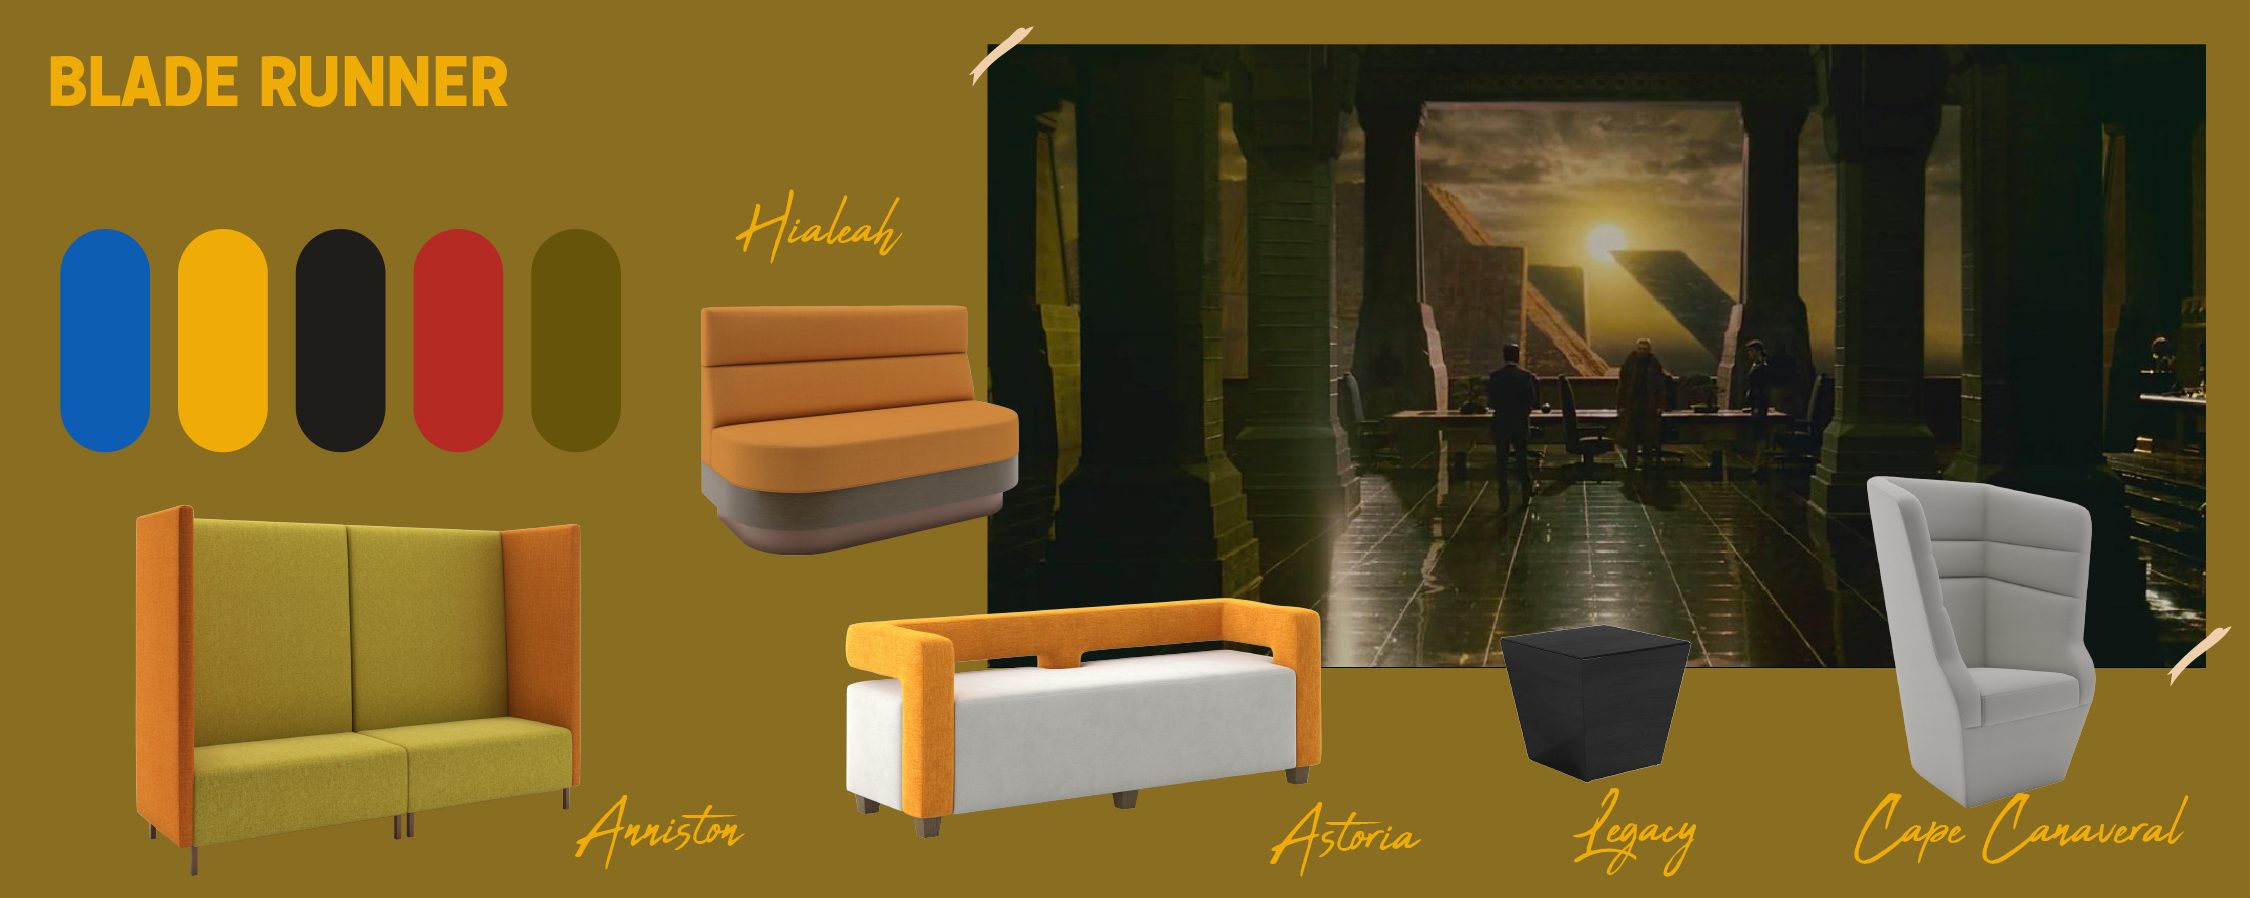 blade runner commercial interior design furniture styles